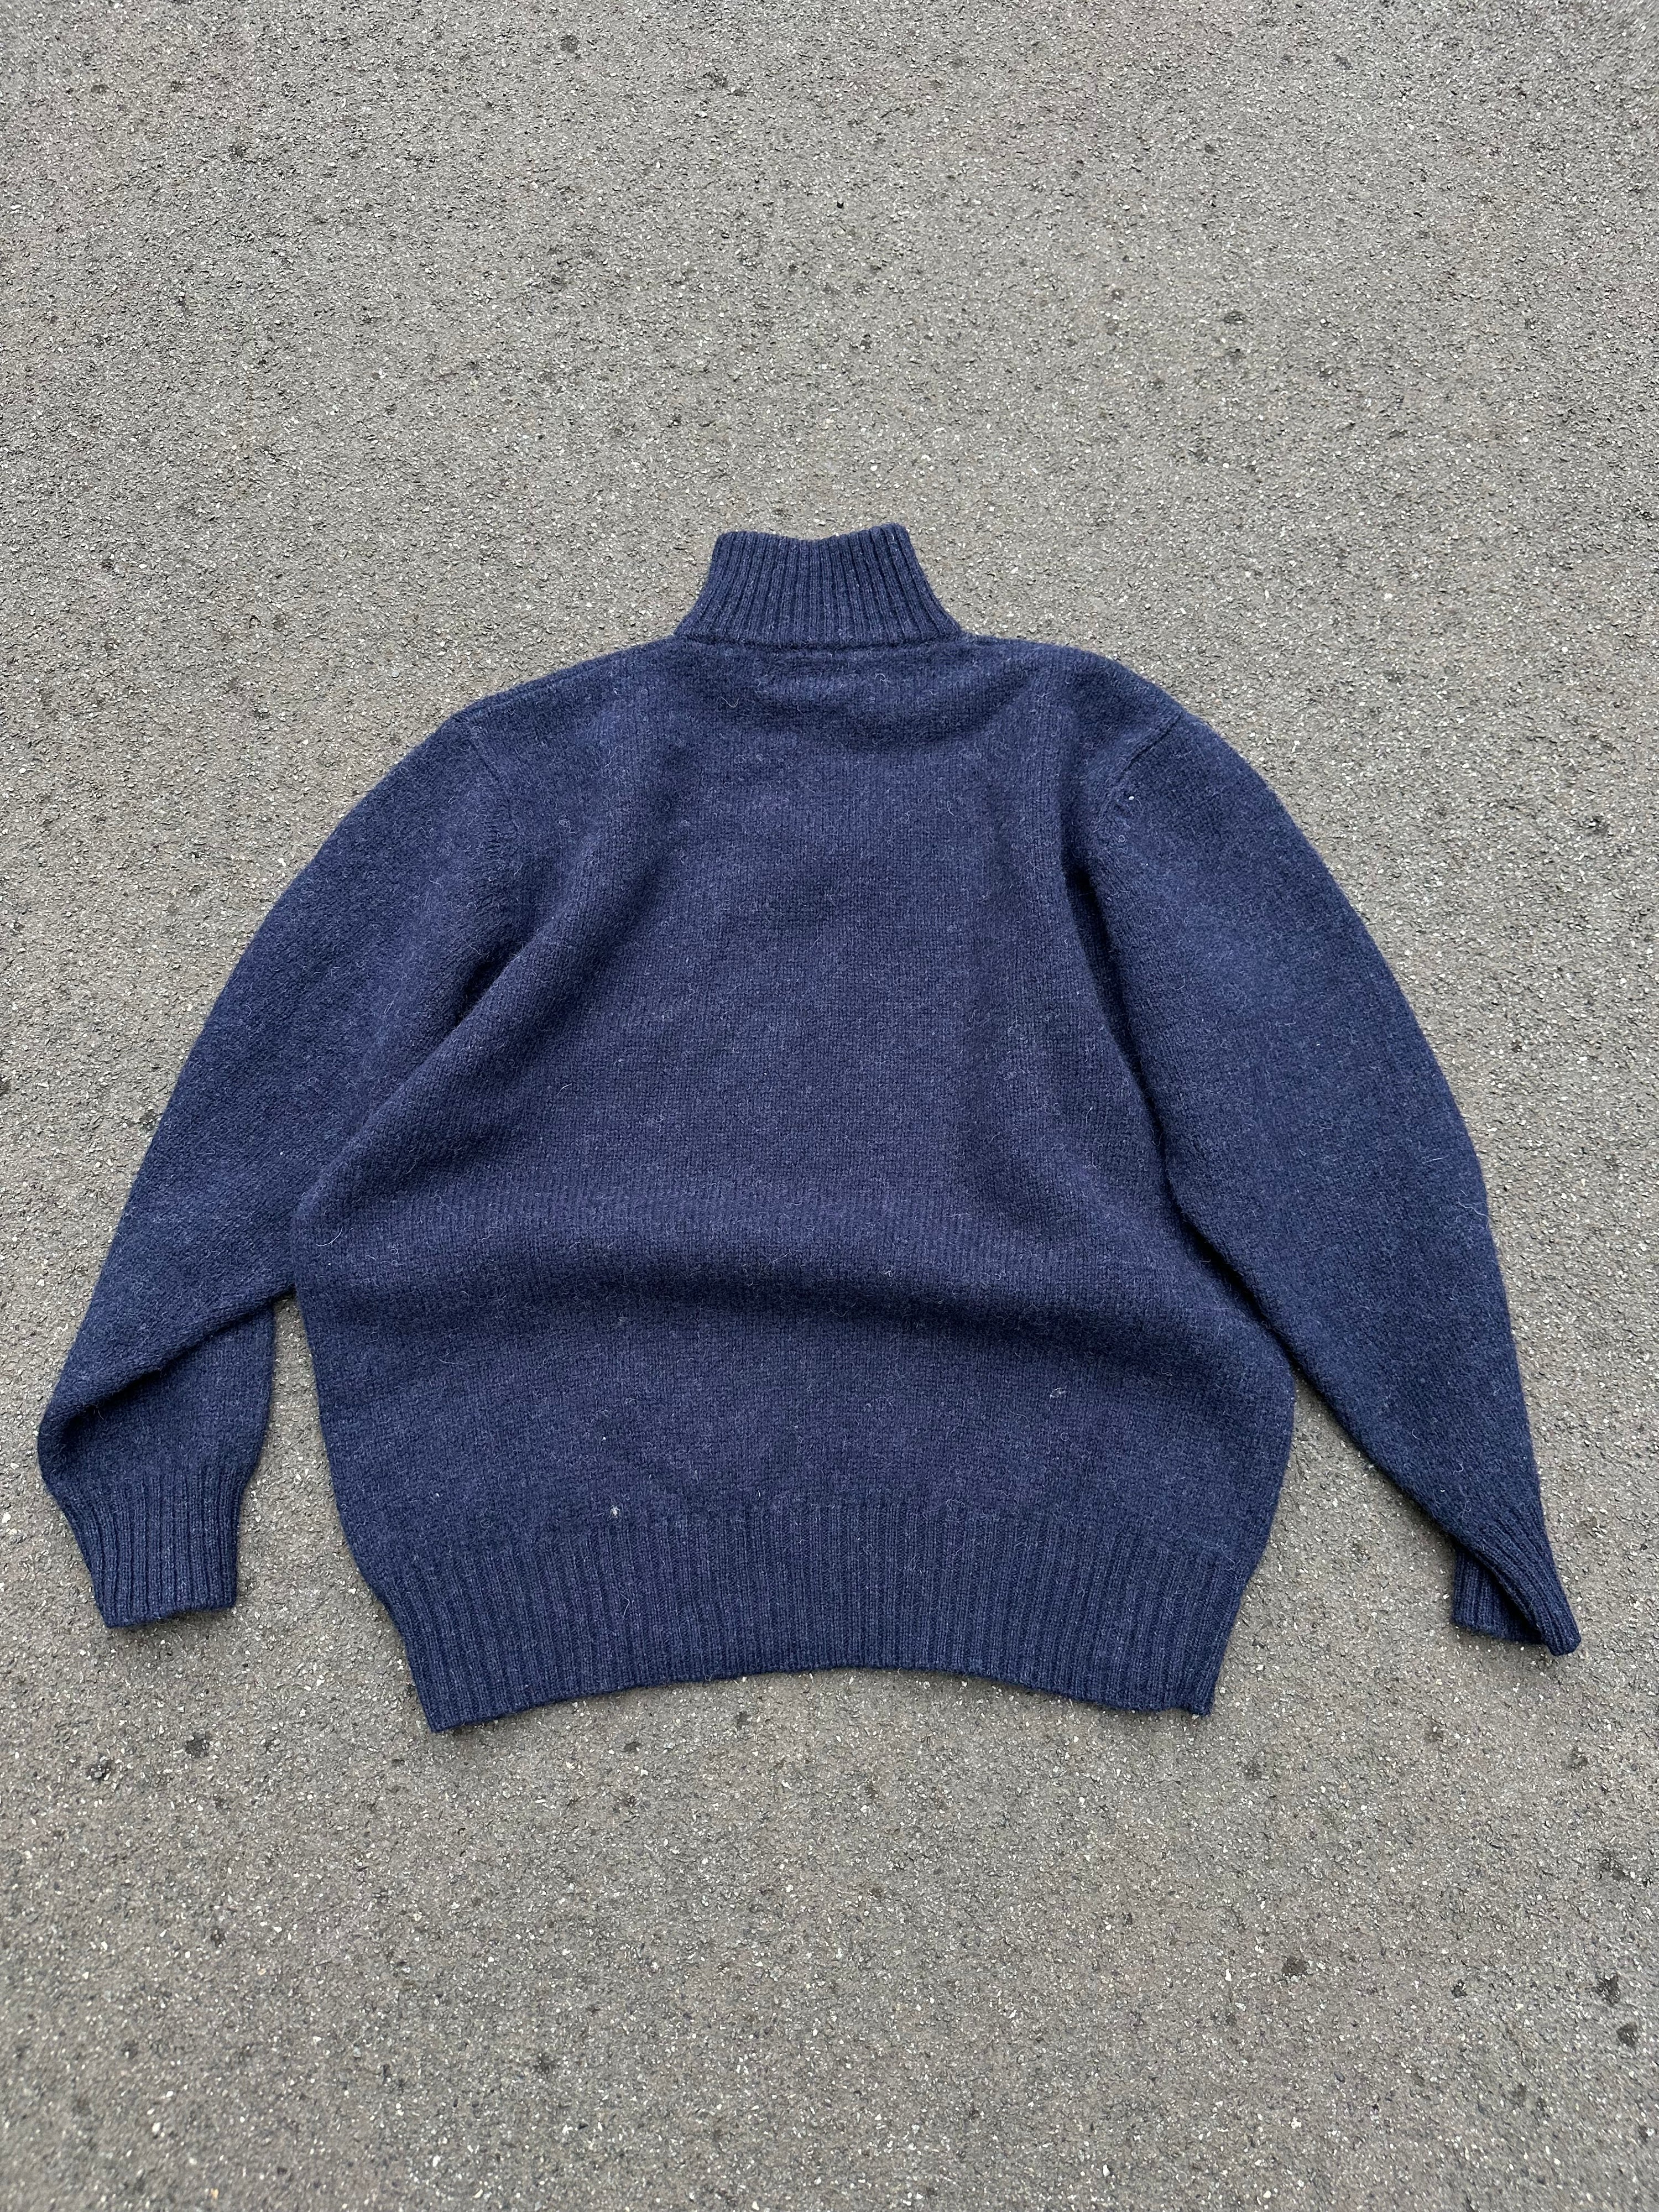 Vintage Asics Knit Zip Sweater (L)